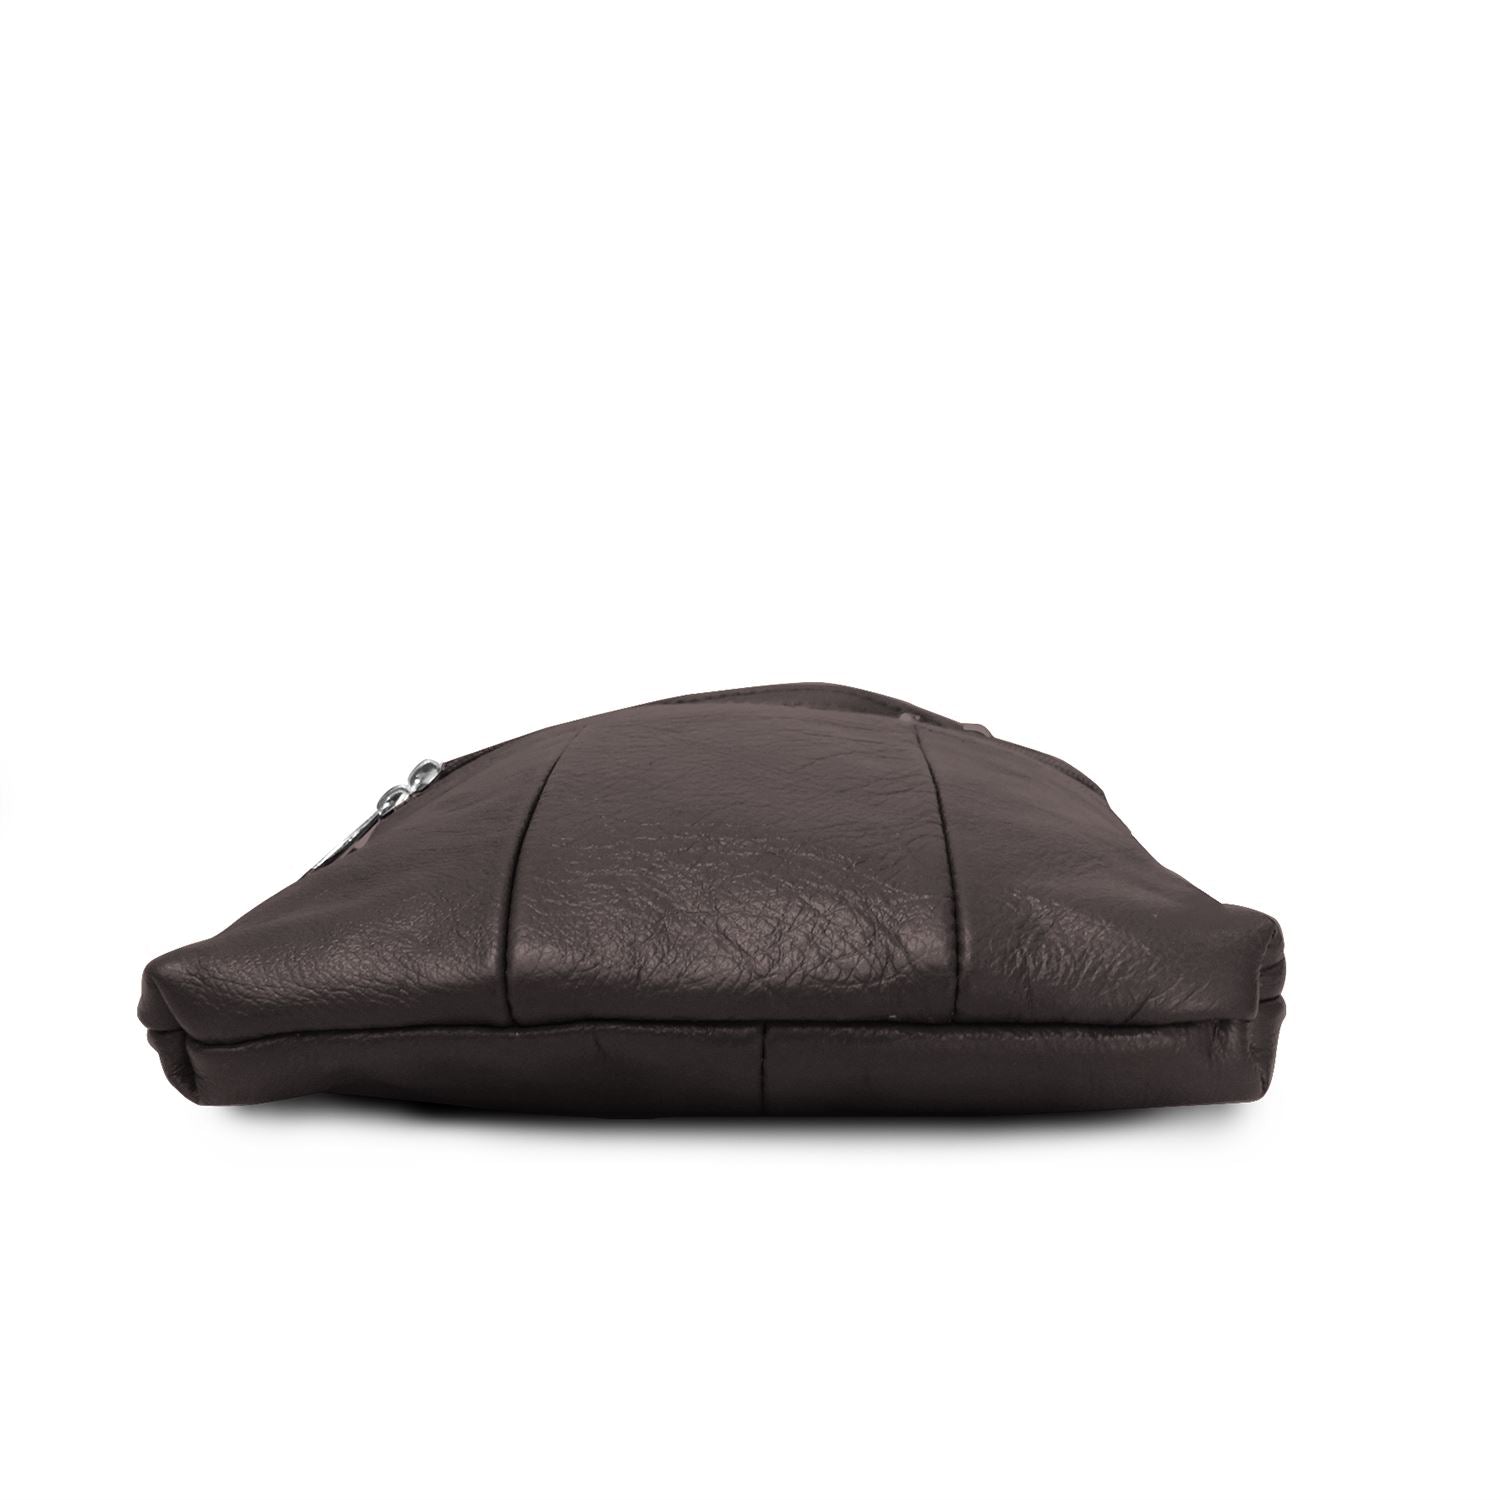 Tovoso Genuine Leather Multi-pocket Crossbody Purse Bag Built